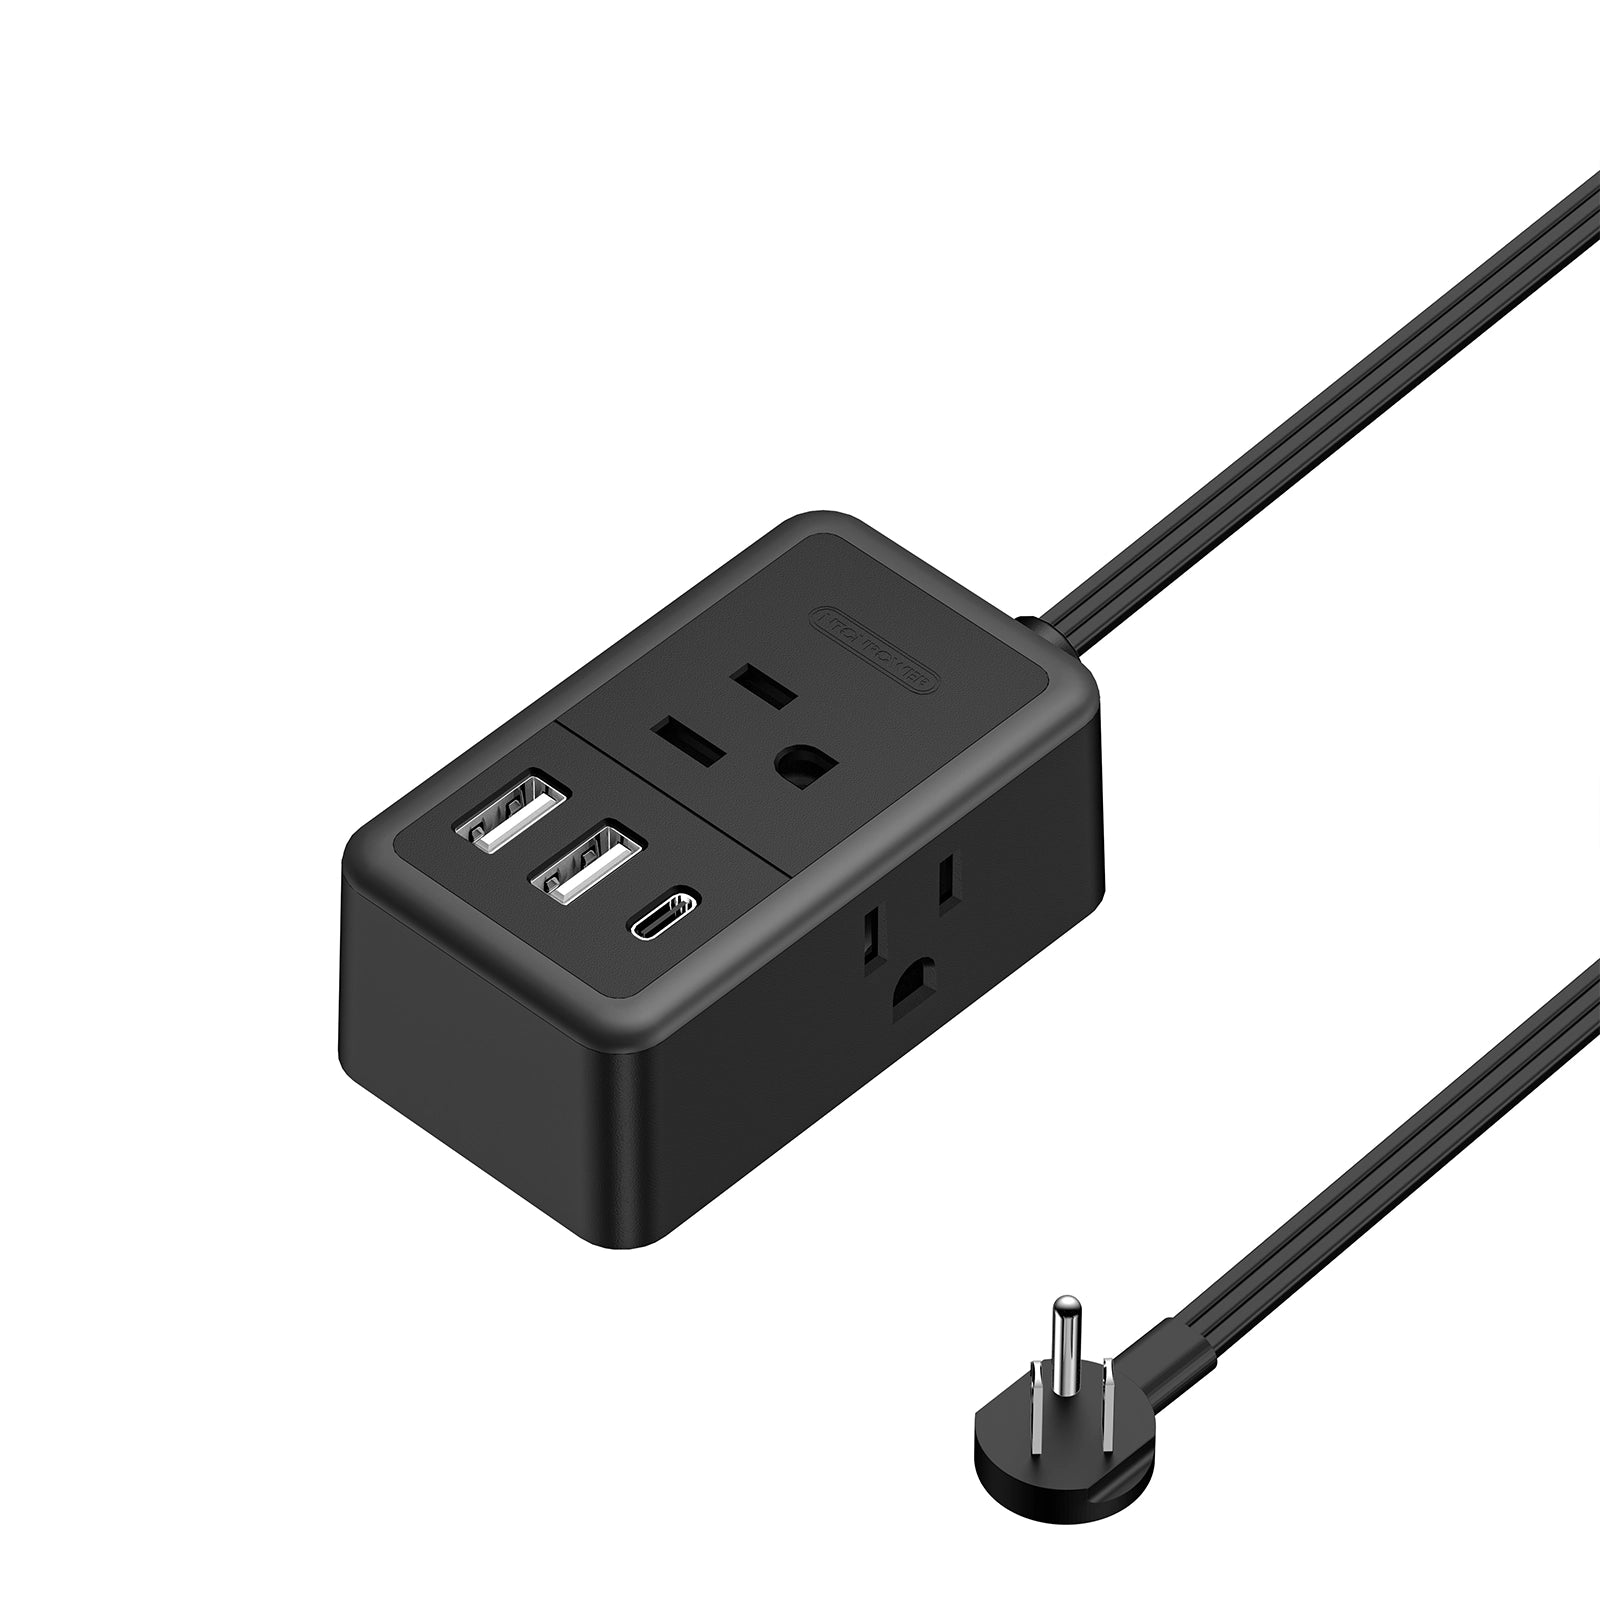 Ntonpower New Power Strip 3 Outlets 2 USB-A 1 USB-C Mini Cruise Travel & Drom